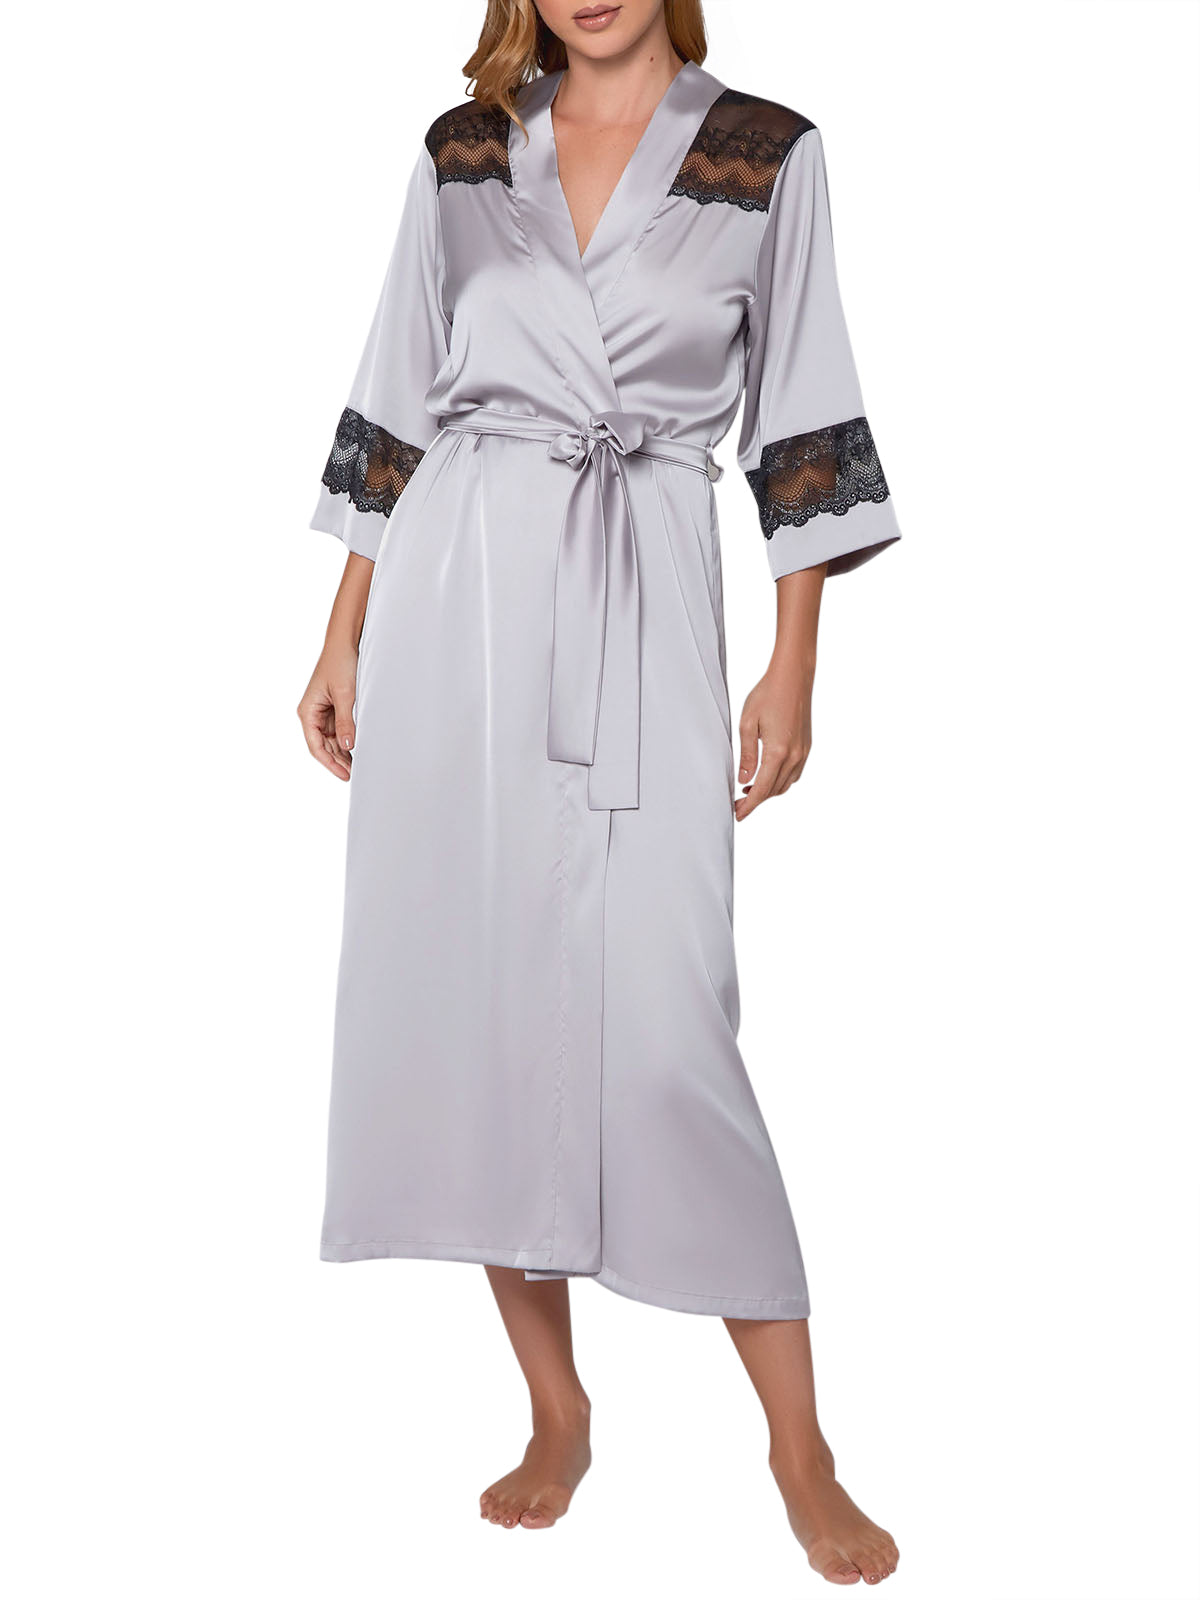 iCollection Robe Women's Tess Long Robe Loungewear